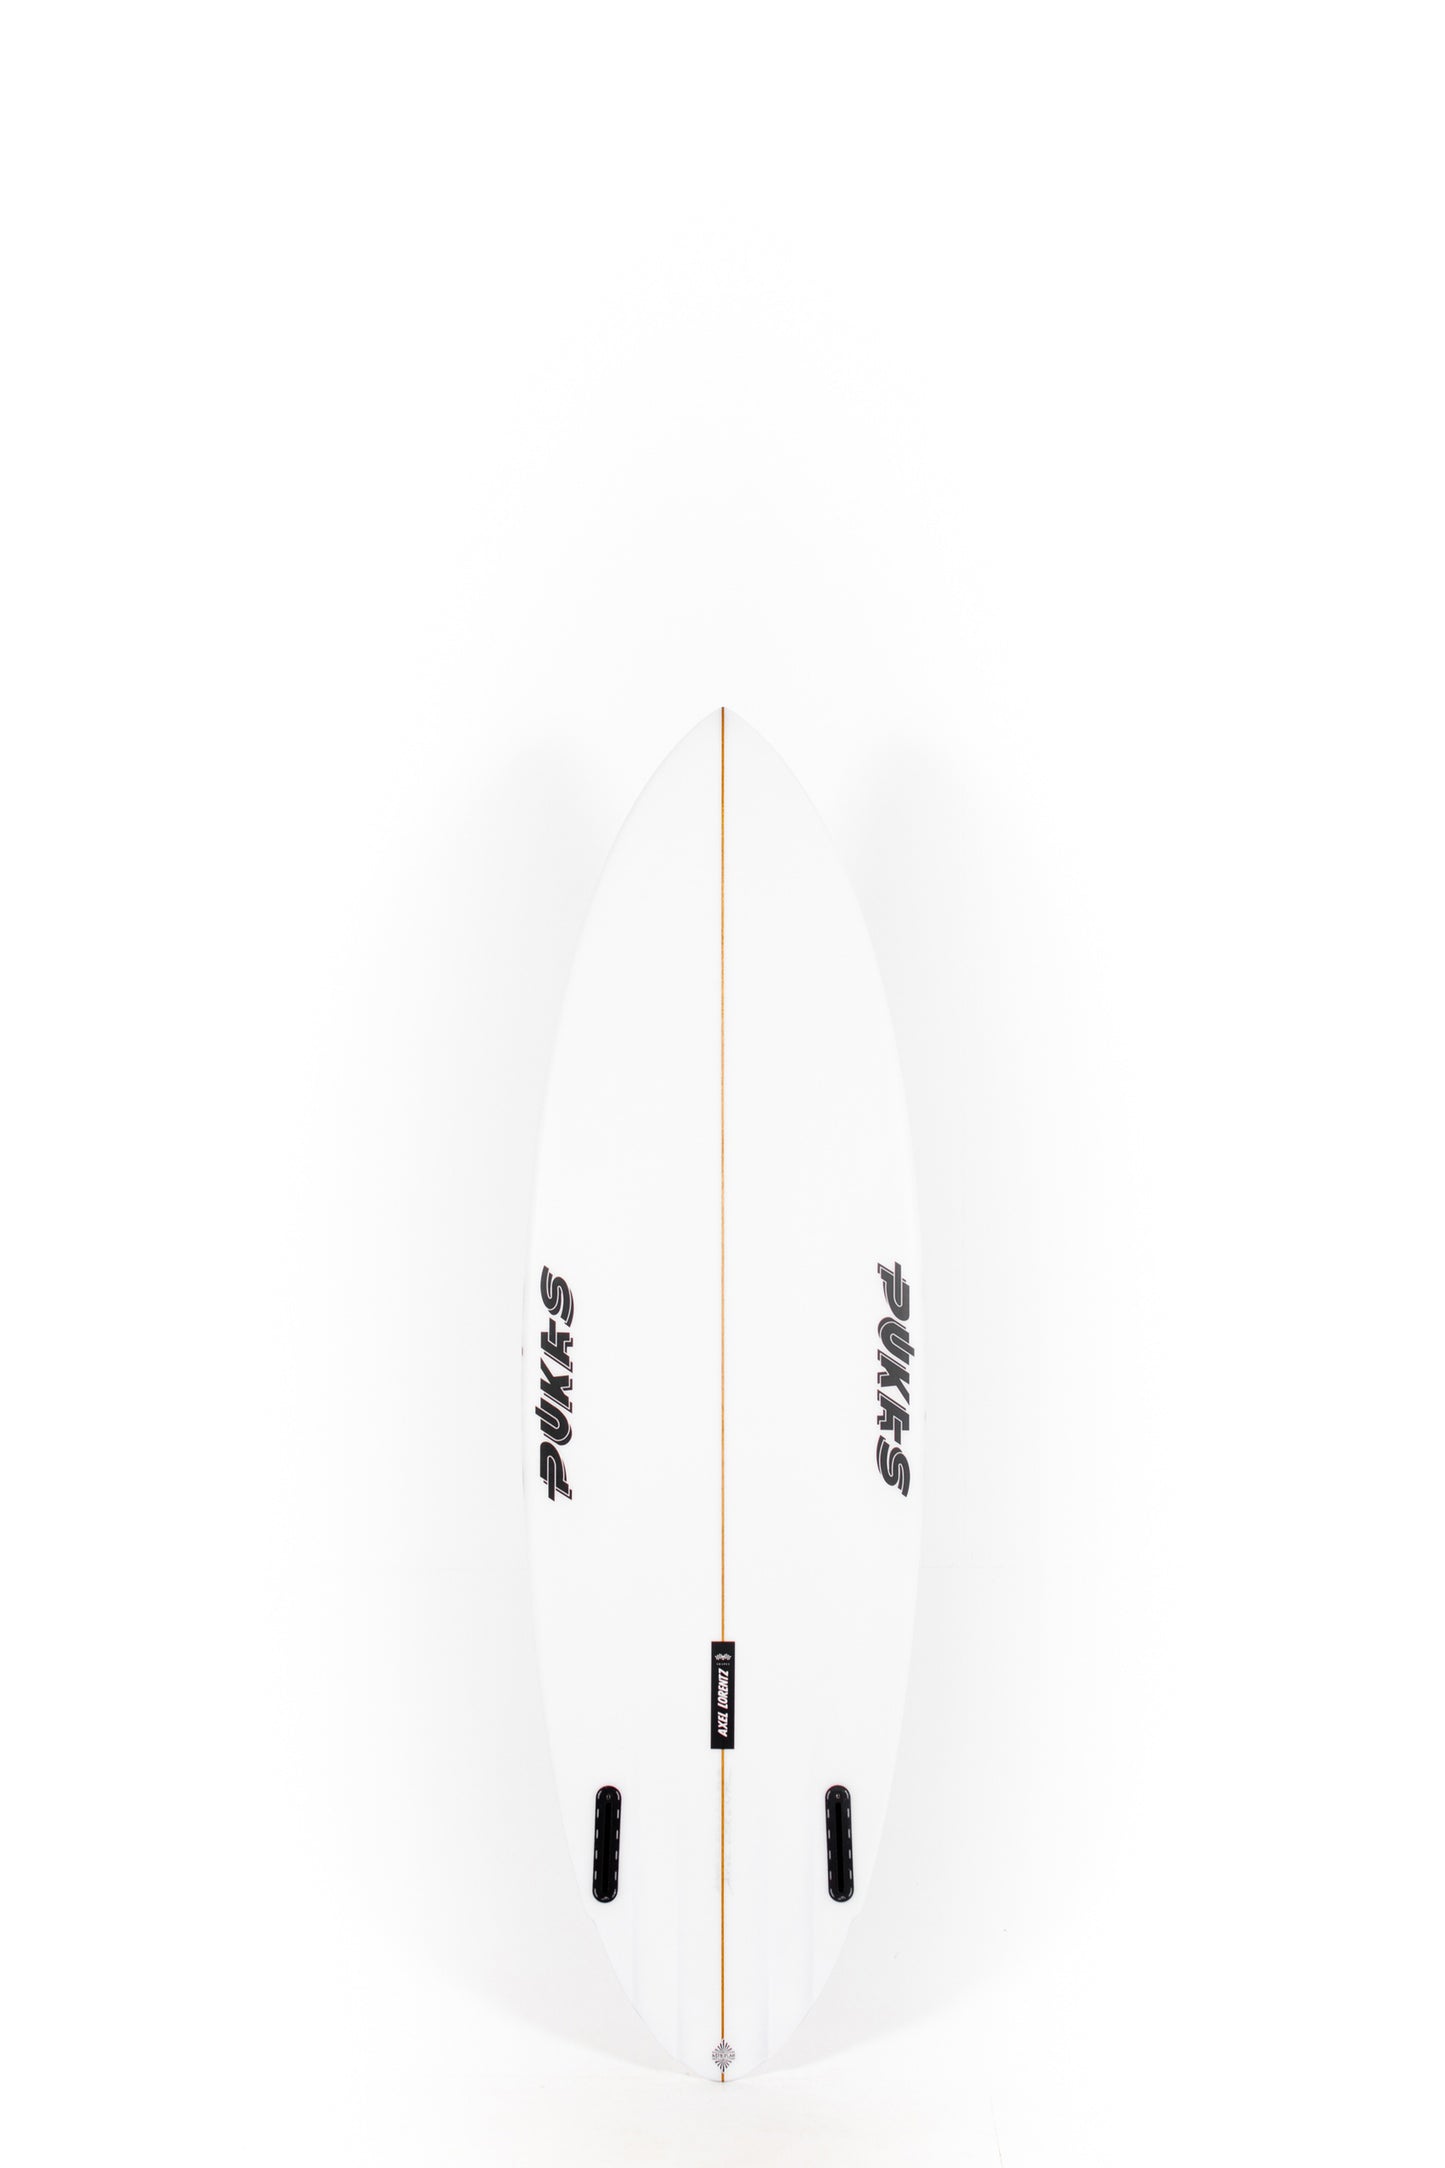 Pukas Surf Shop - Pukas Surfboards - ACID PLAN by Axel Lorentz -  5'10" x 20,25 x 2,5 x 32,38L - AX08260